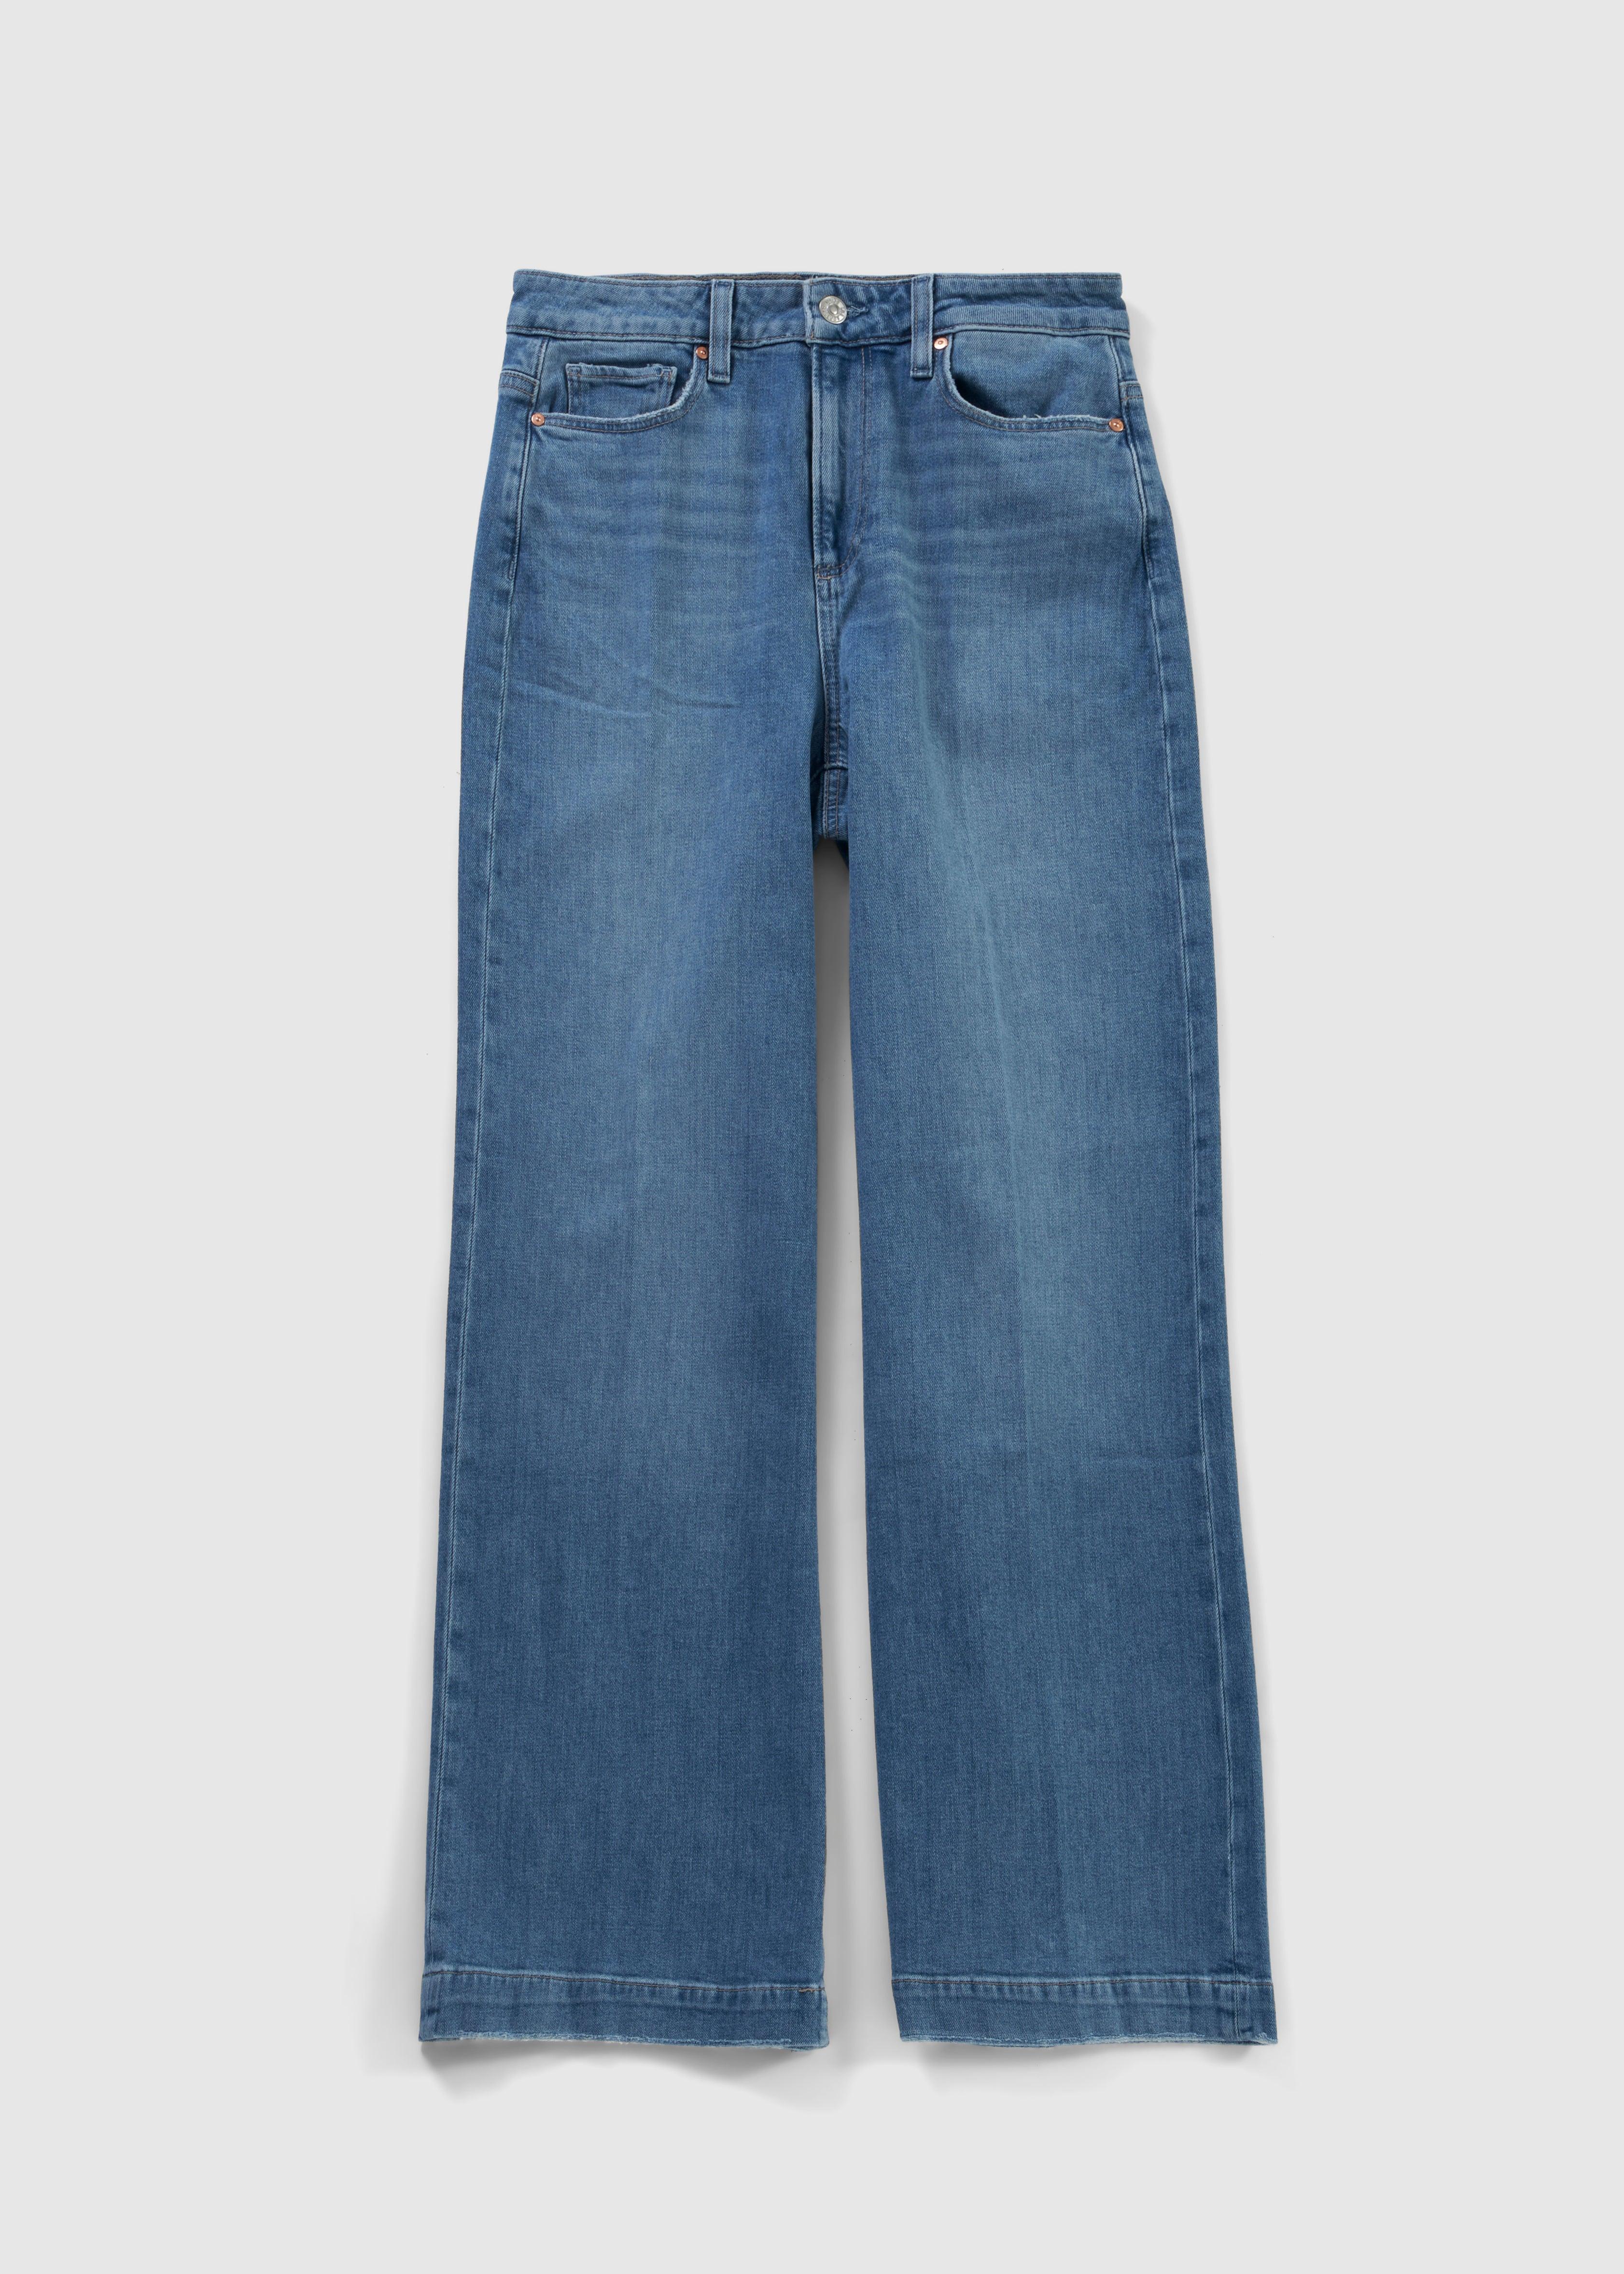 PAIGE Denim Harper Wide Leg Jeans in Blue - Save 5% | Lyst